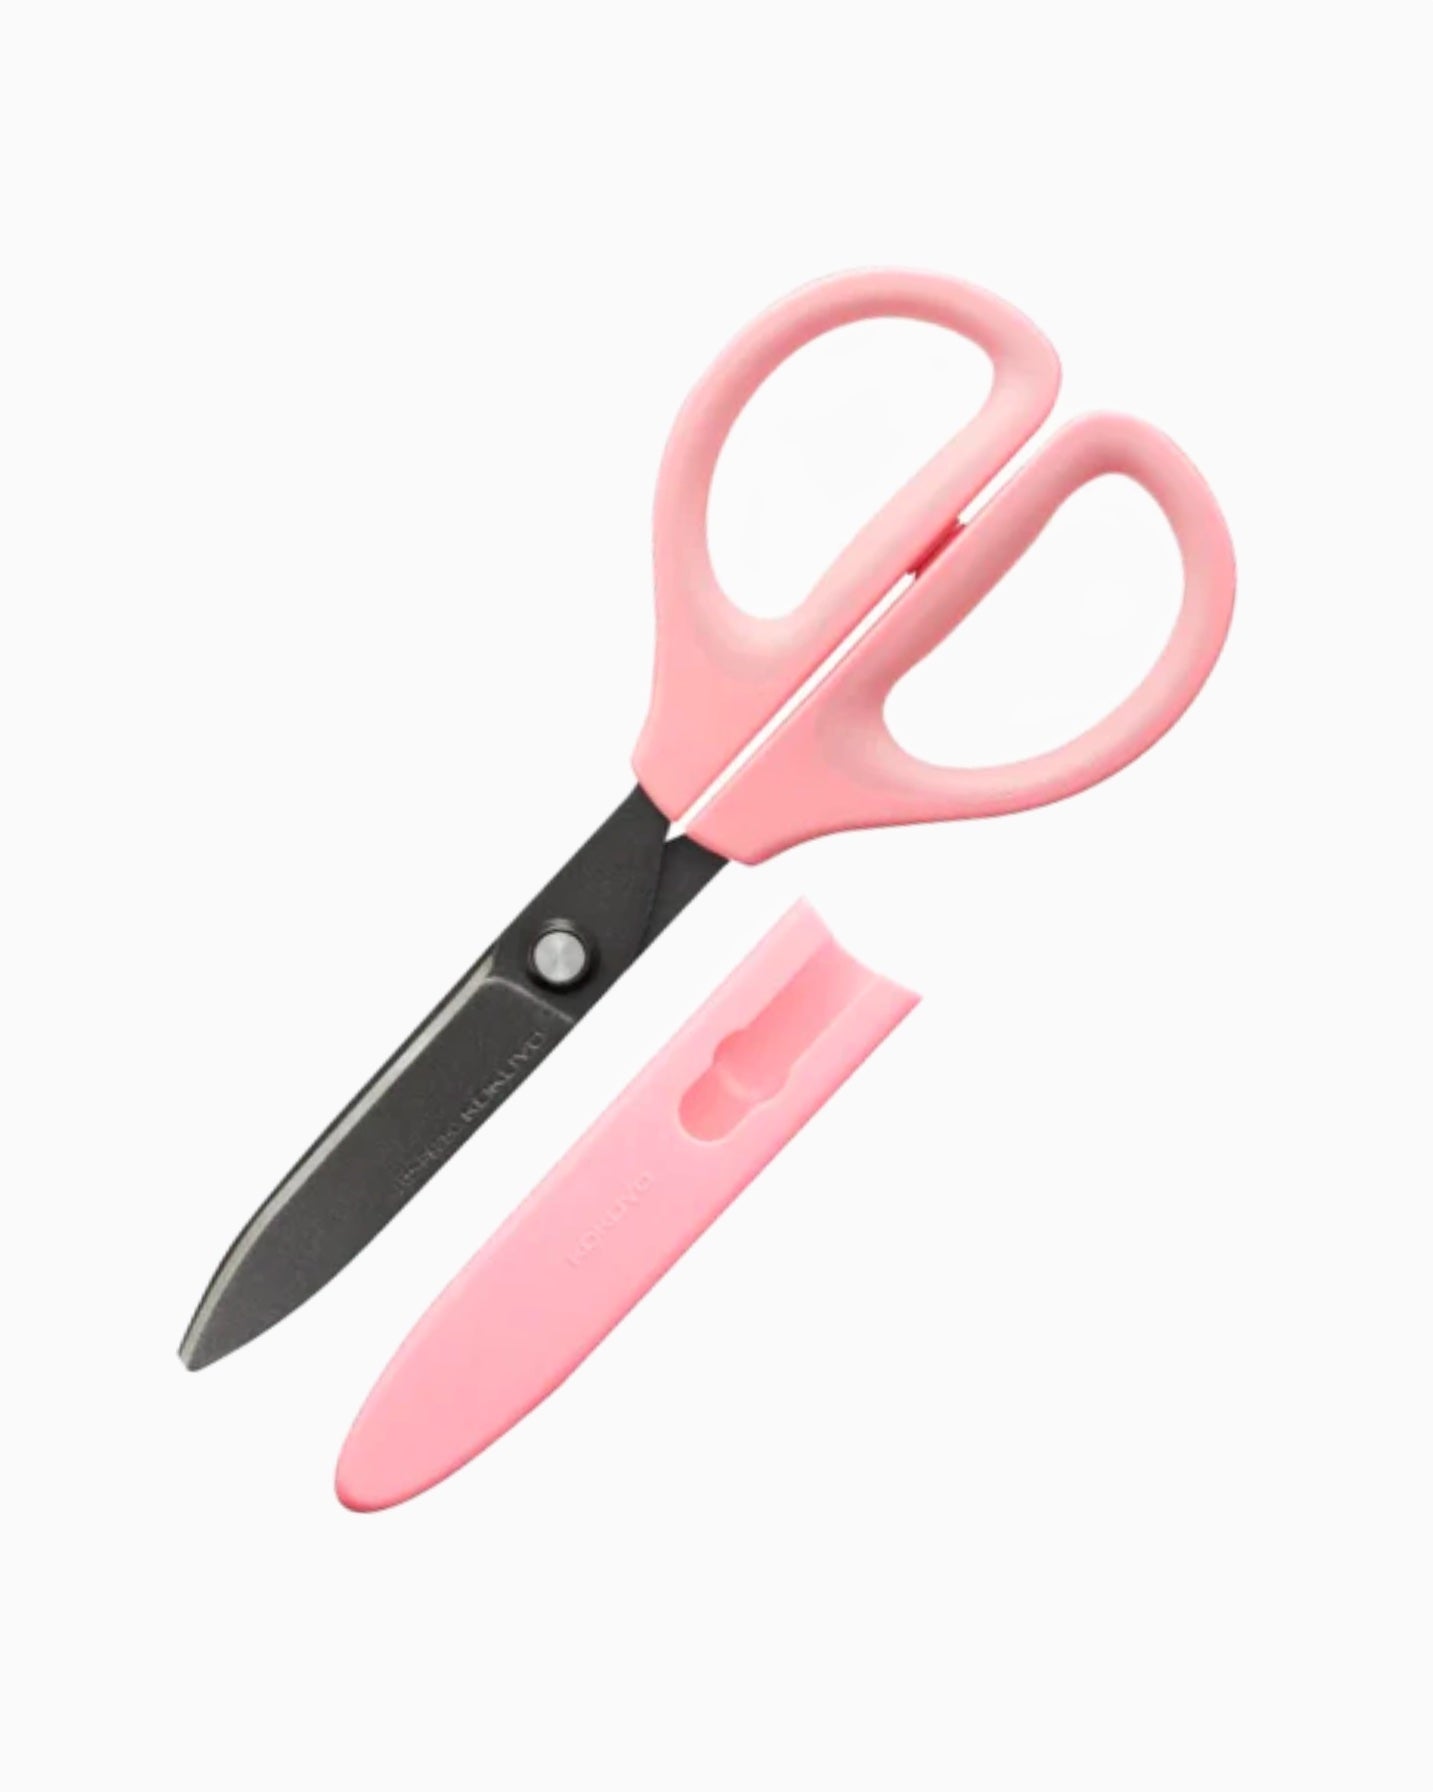 Kokuyo Scissors, Saxa Glueless Blade, Red (p280r)